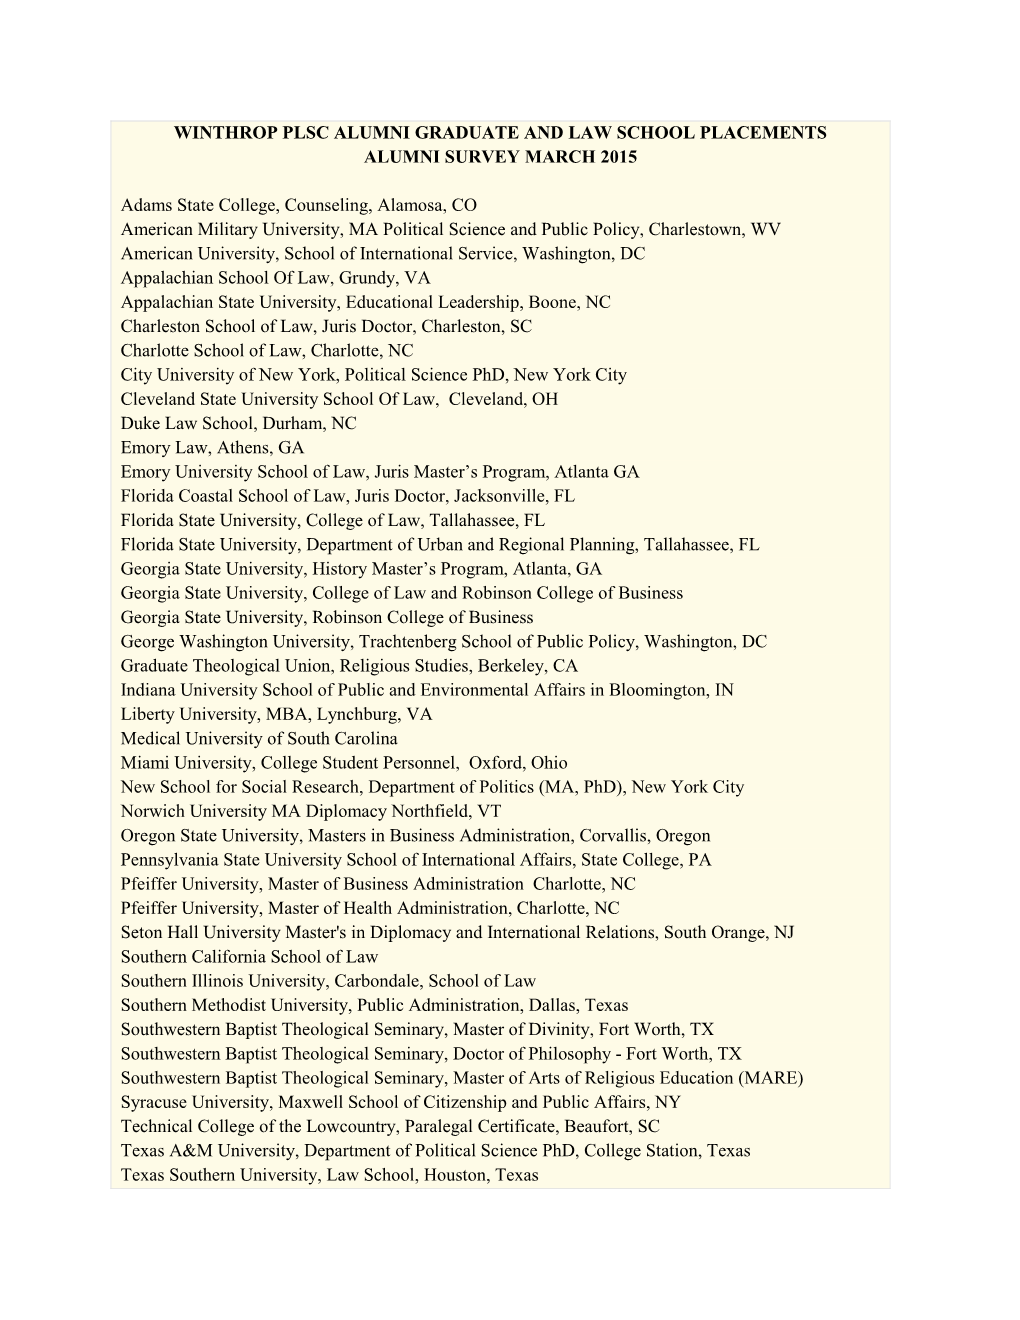 Winthrop Plsc Alumni Graduate and Law School Placements Alumni Survey March 2015